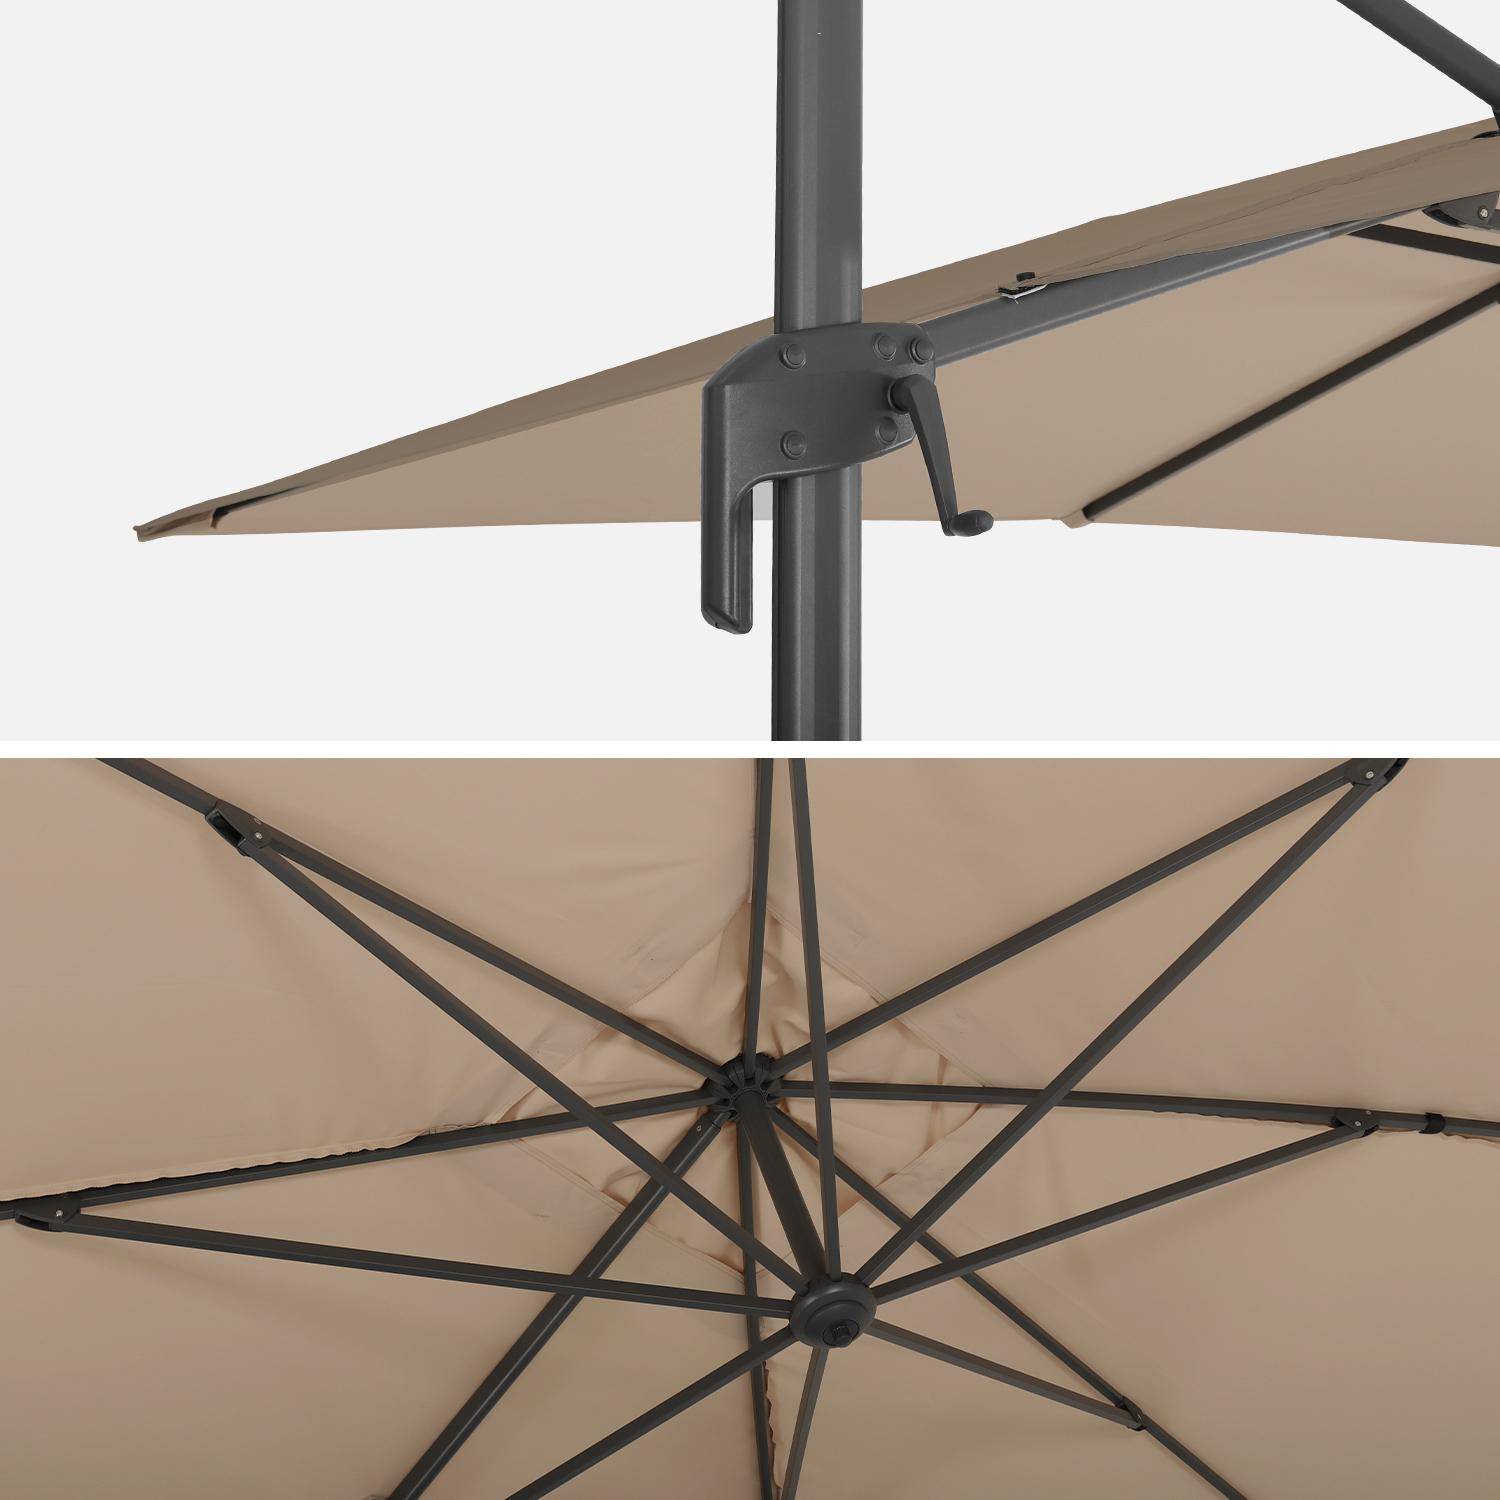 Parasol rectangular deportado 3 x 4 m - Antibes - beige - parasol deportado, basculante, plegable y giratorio a 360,sweeek,Photo7